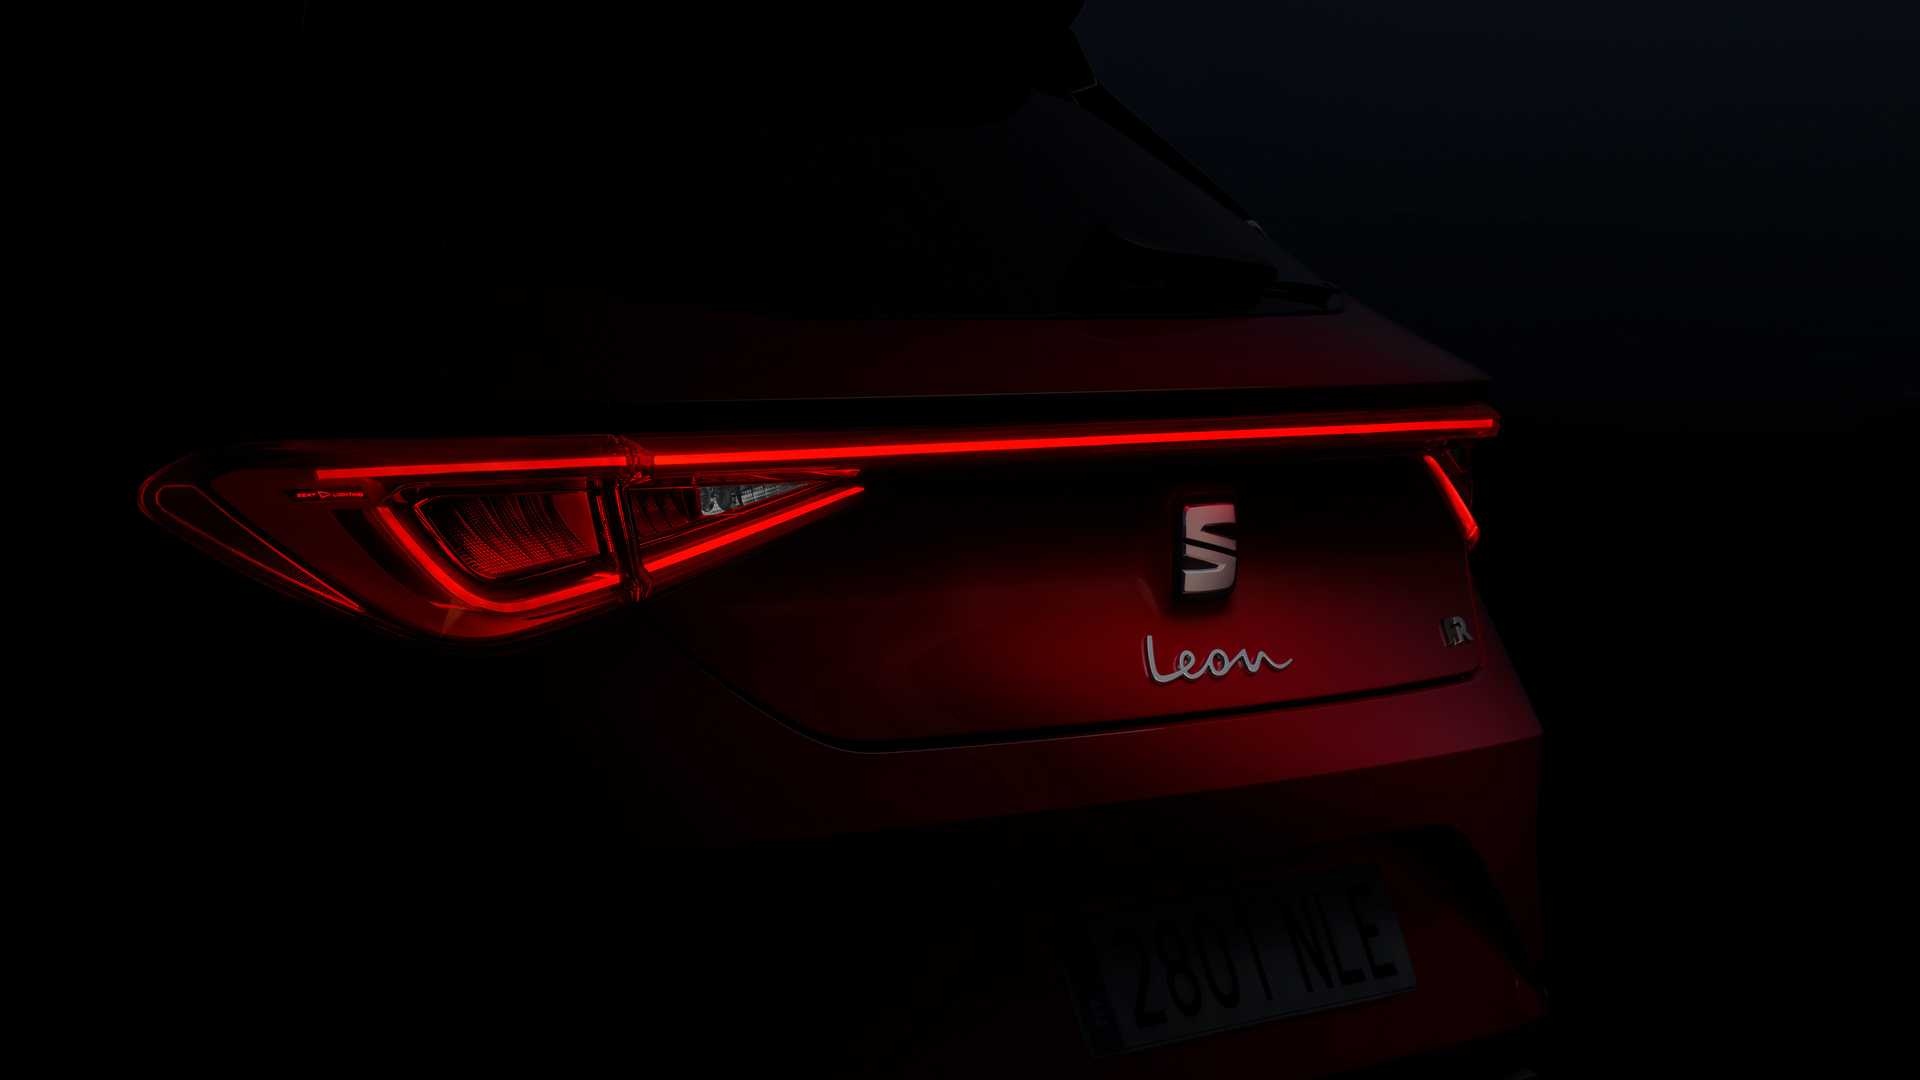 Seat Leon 2020, Teaser image, Futuristic appearance, Edgy rear, 1920x1080 Full HD Desktop